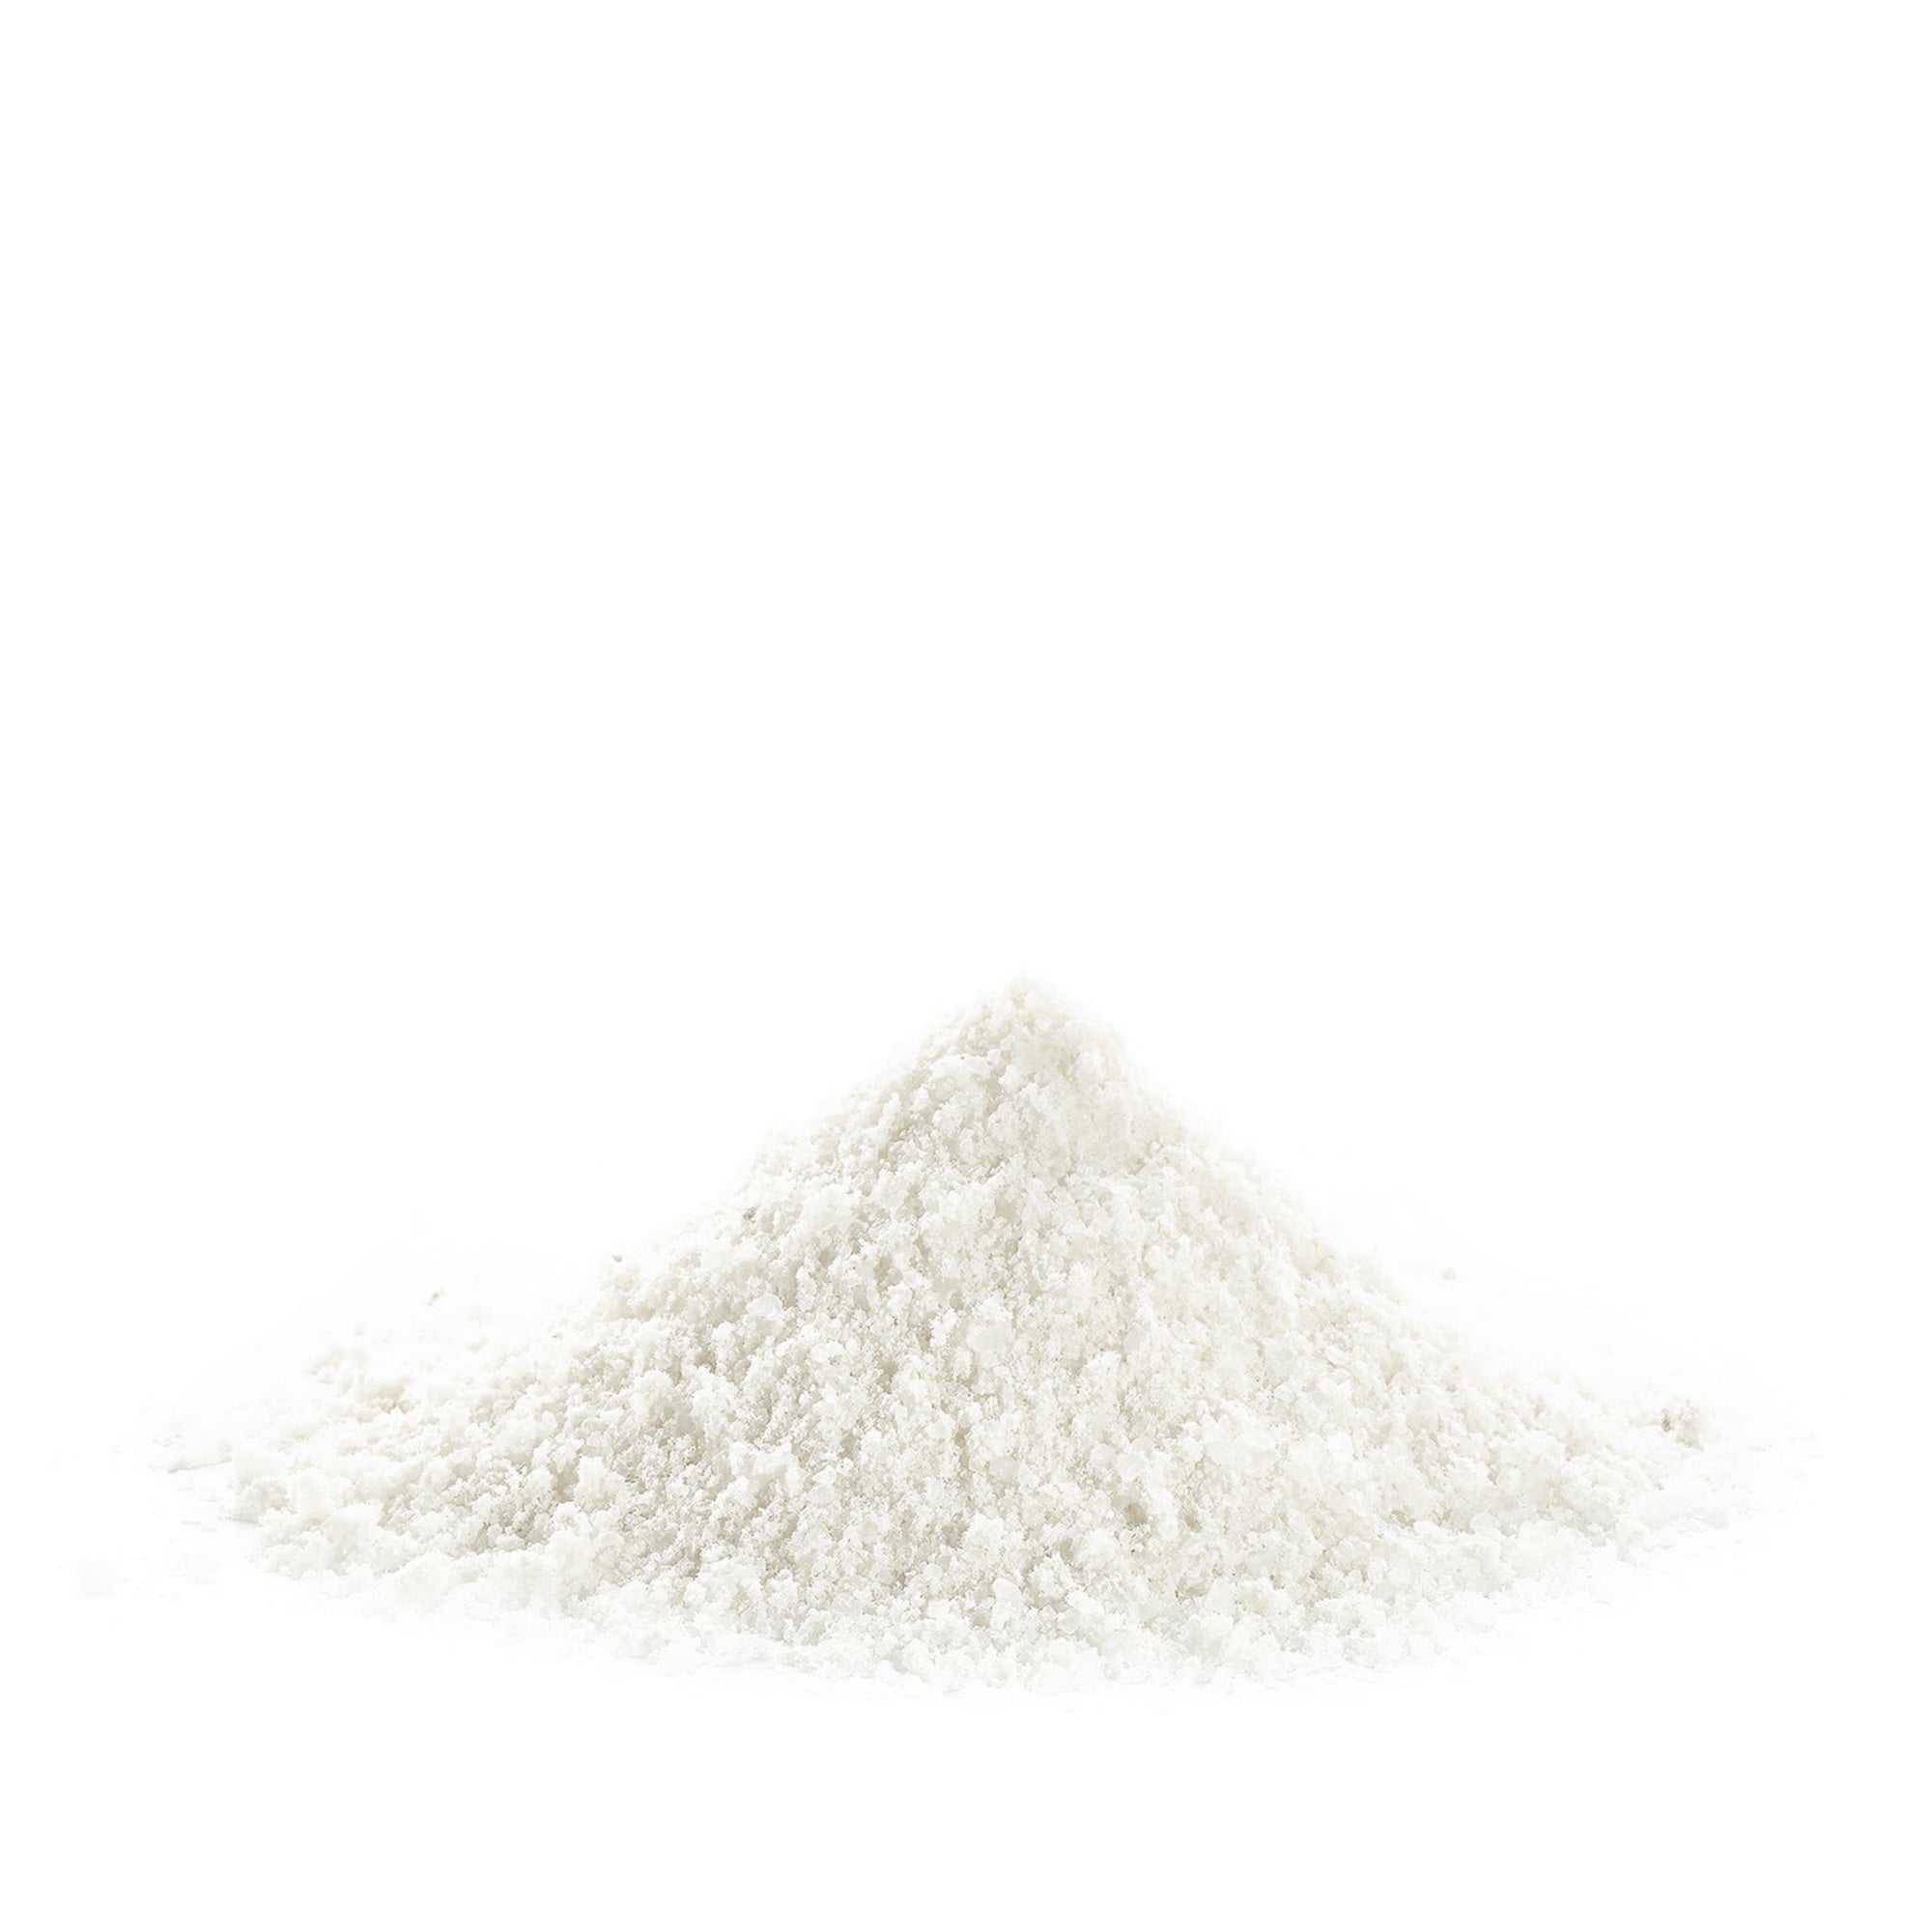 Sensitive Skin Sea Salt Soak texture on white background.